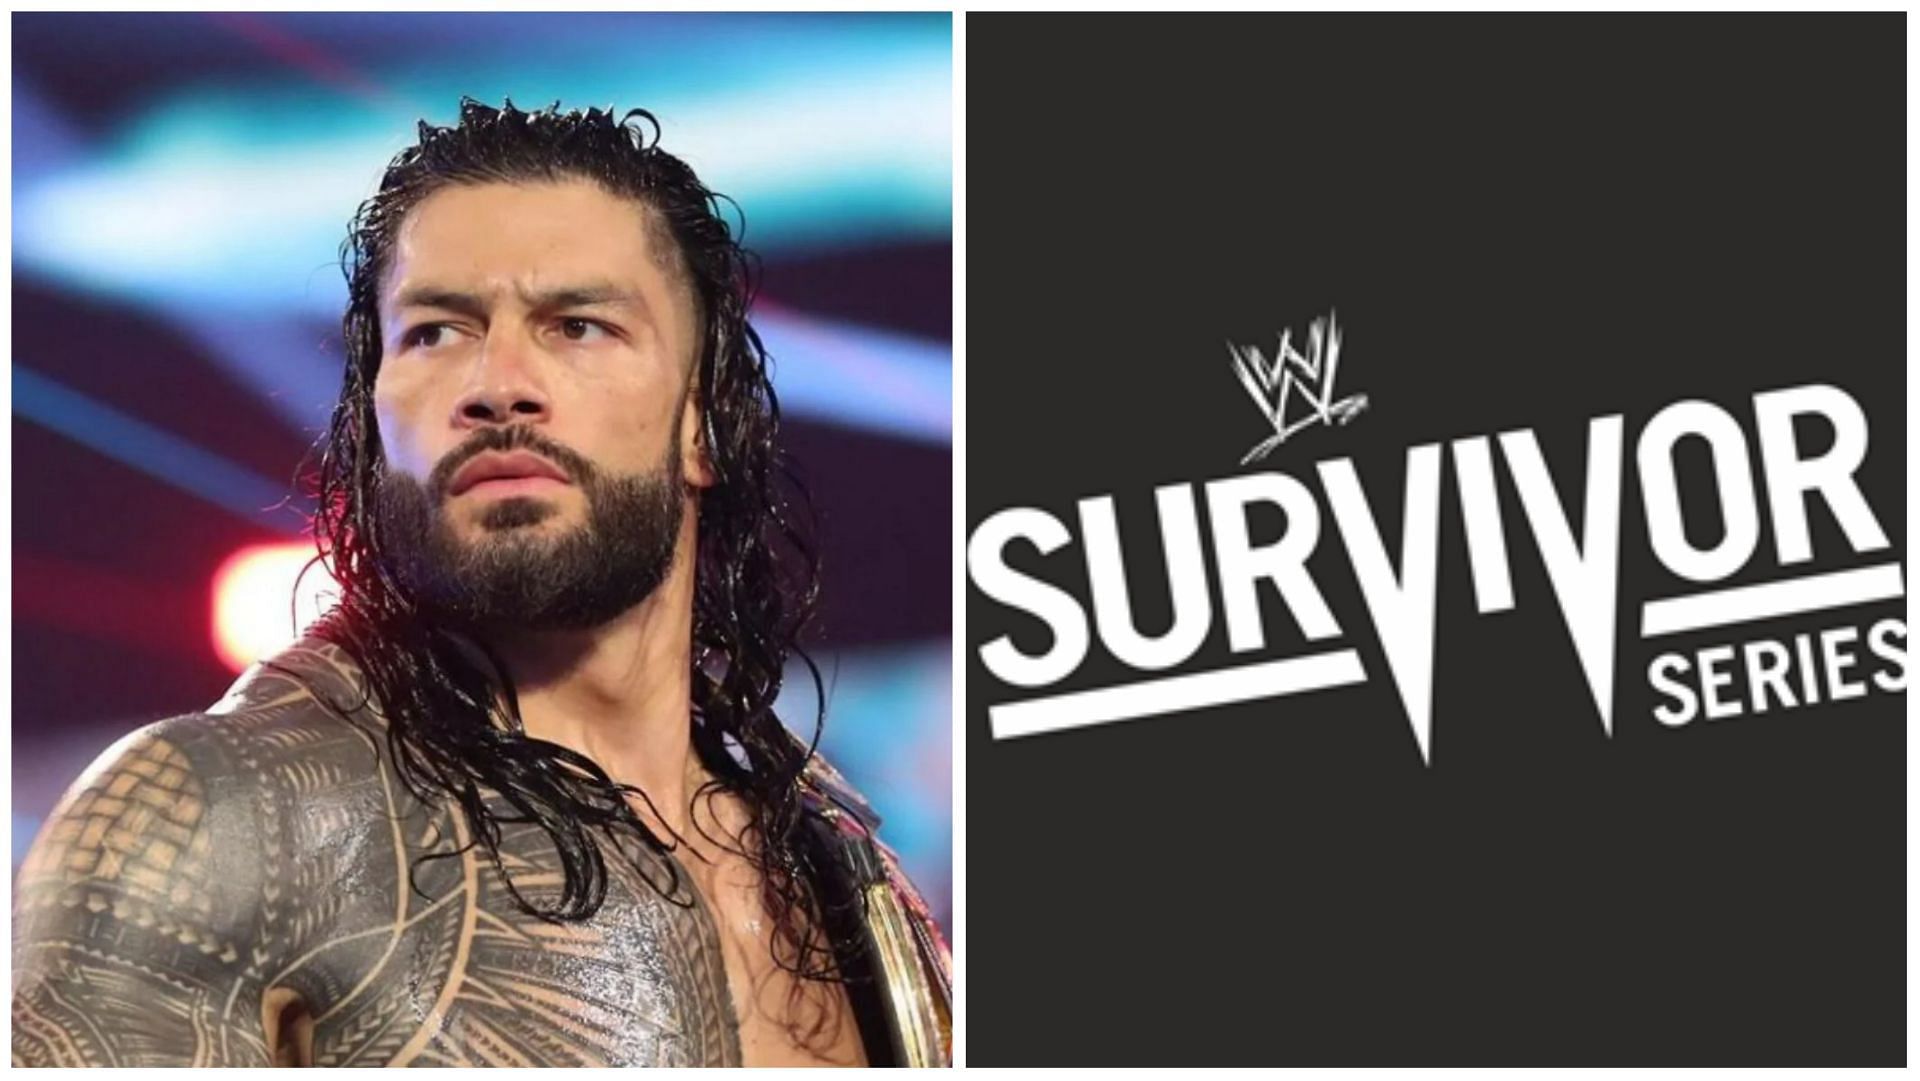 Roman Reigns (L); WWE Survivor Series logo (R)